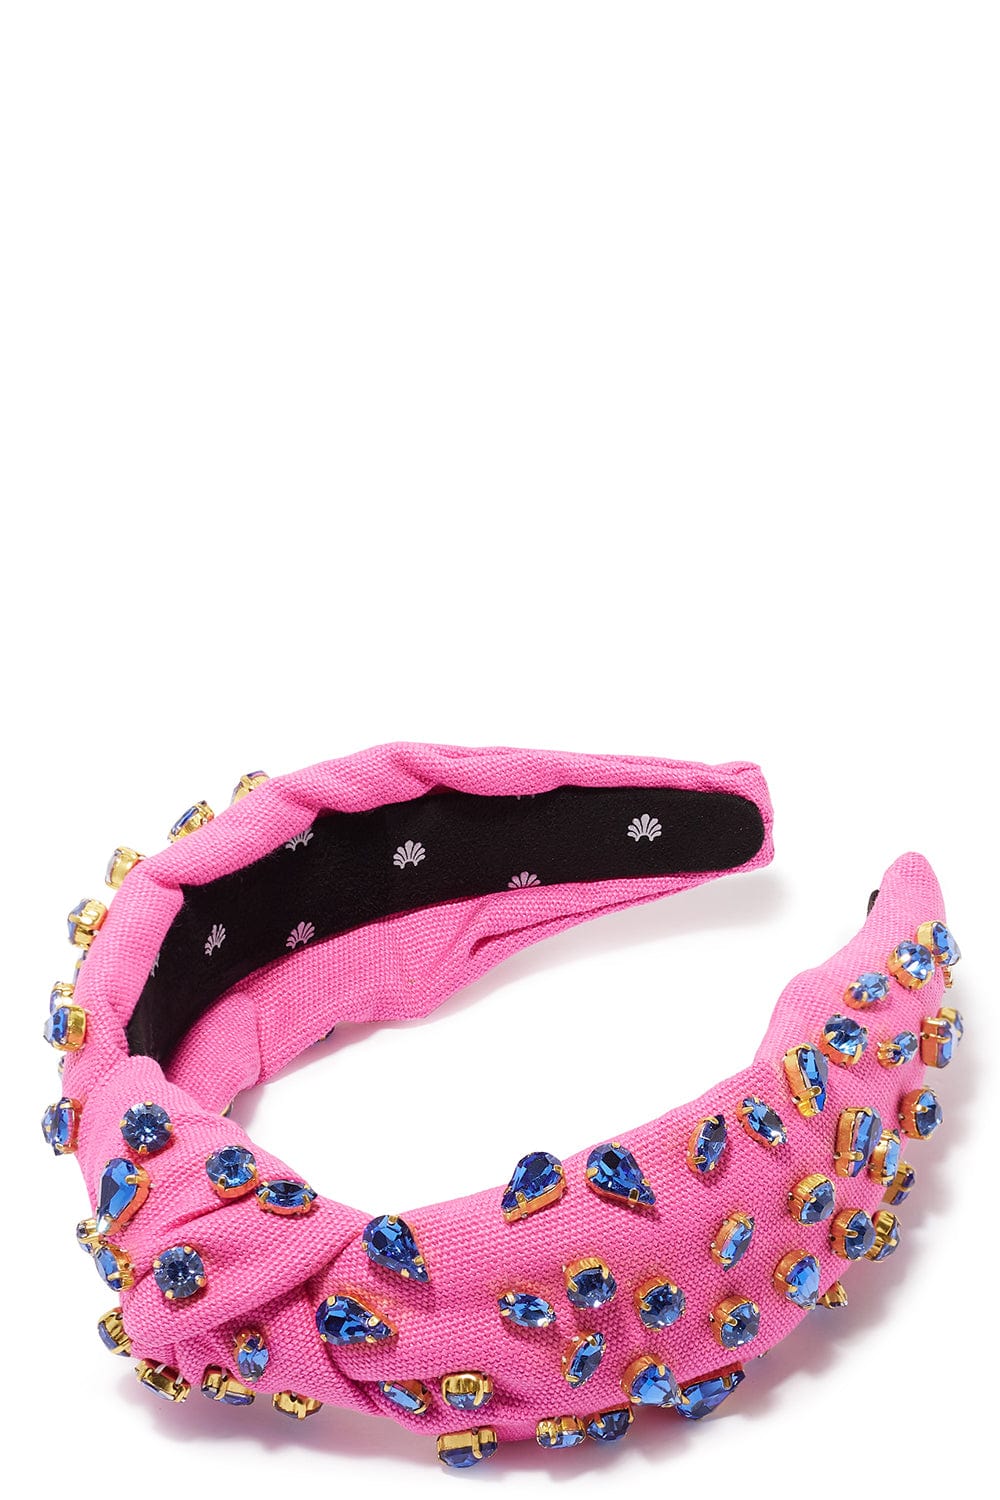 LELE SADOUGHI DESIGNS-Jeweled Knotted Headband - Pink-PINK